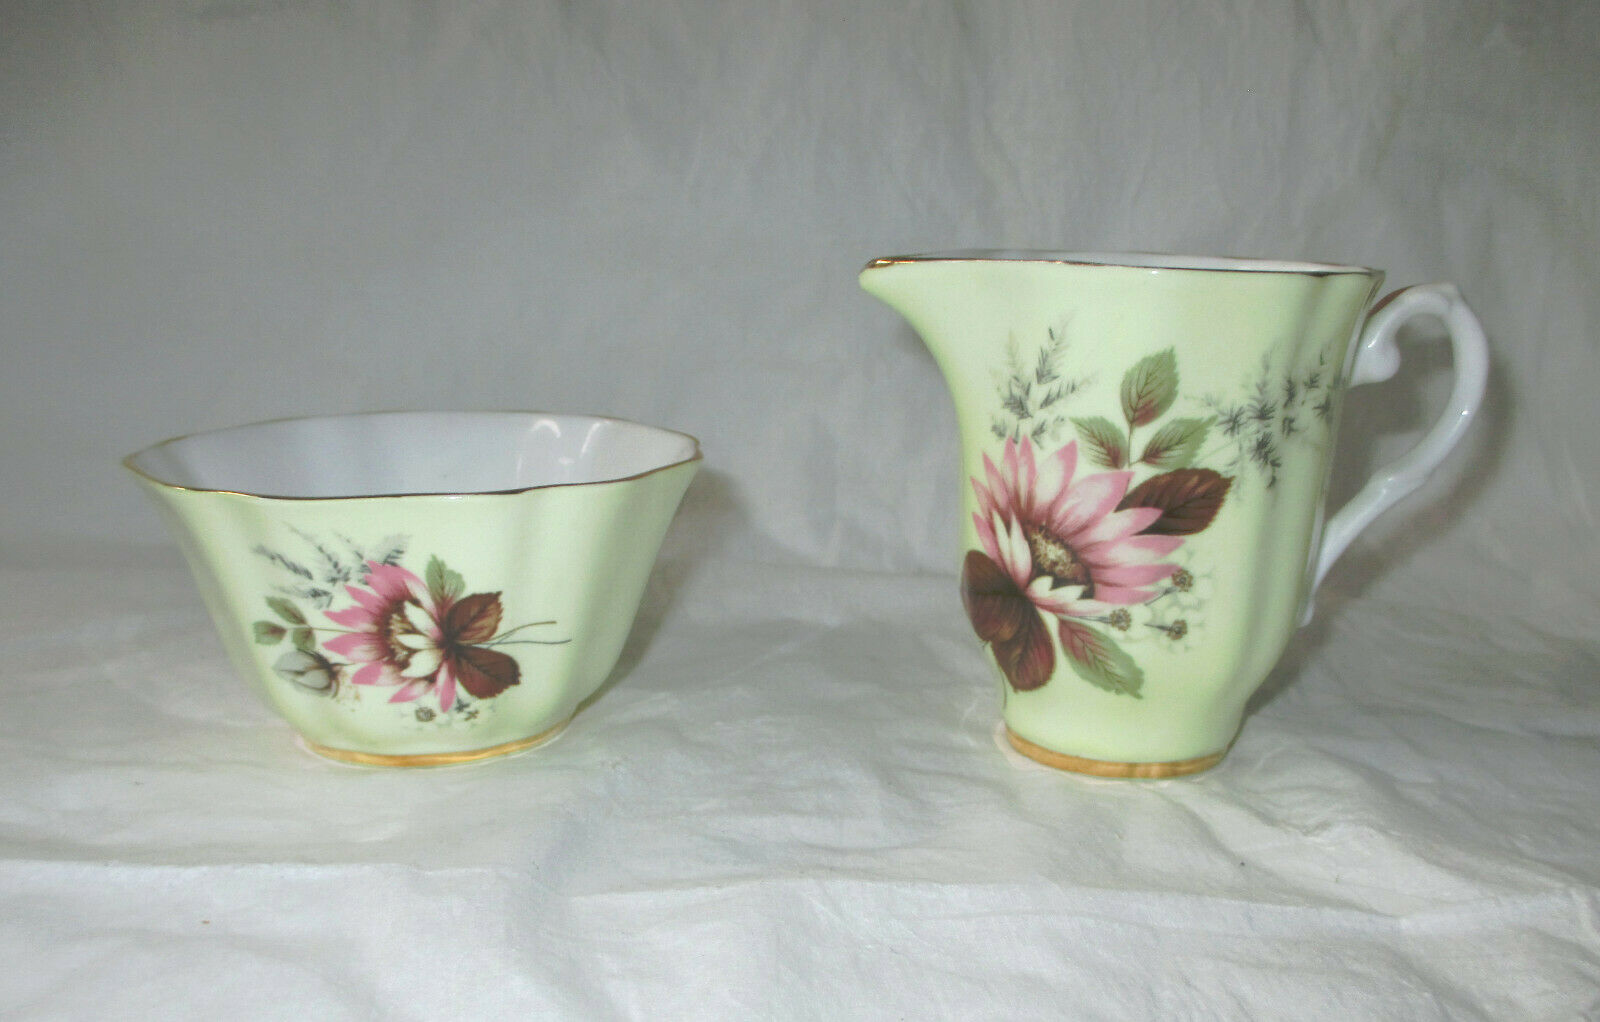 1950s Royal Grafton England Fine Bone China Sugar Bowl and Creamer, Pink Flowers